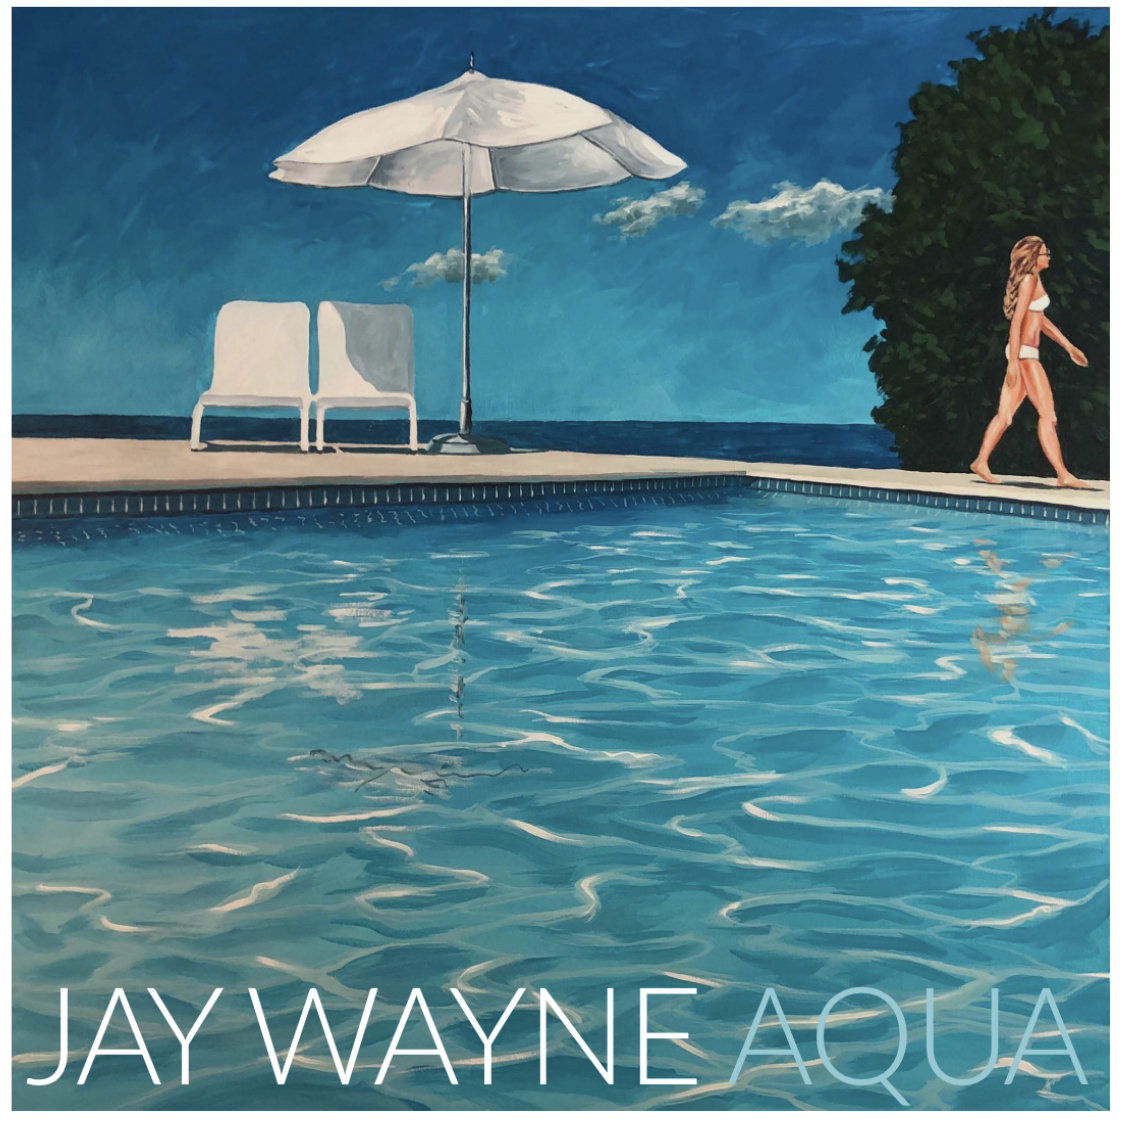 Jay Wayne: Dark Blue